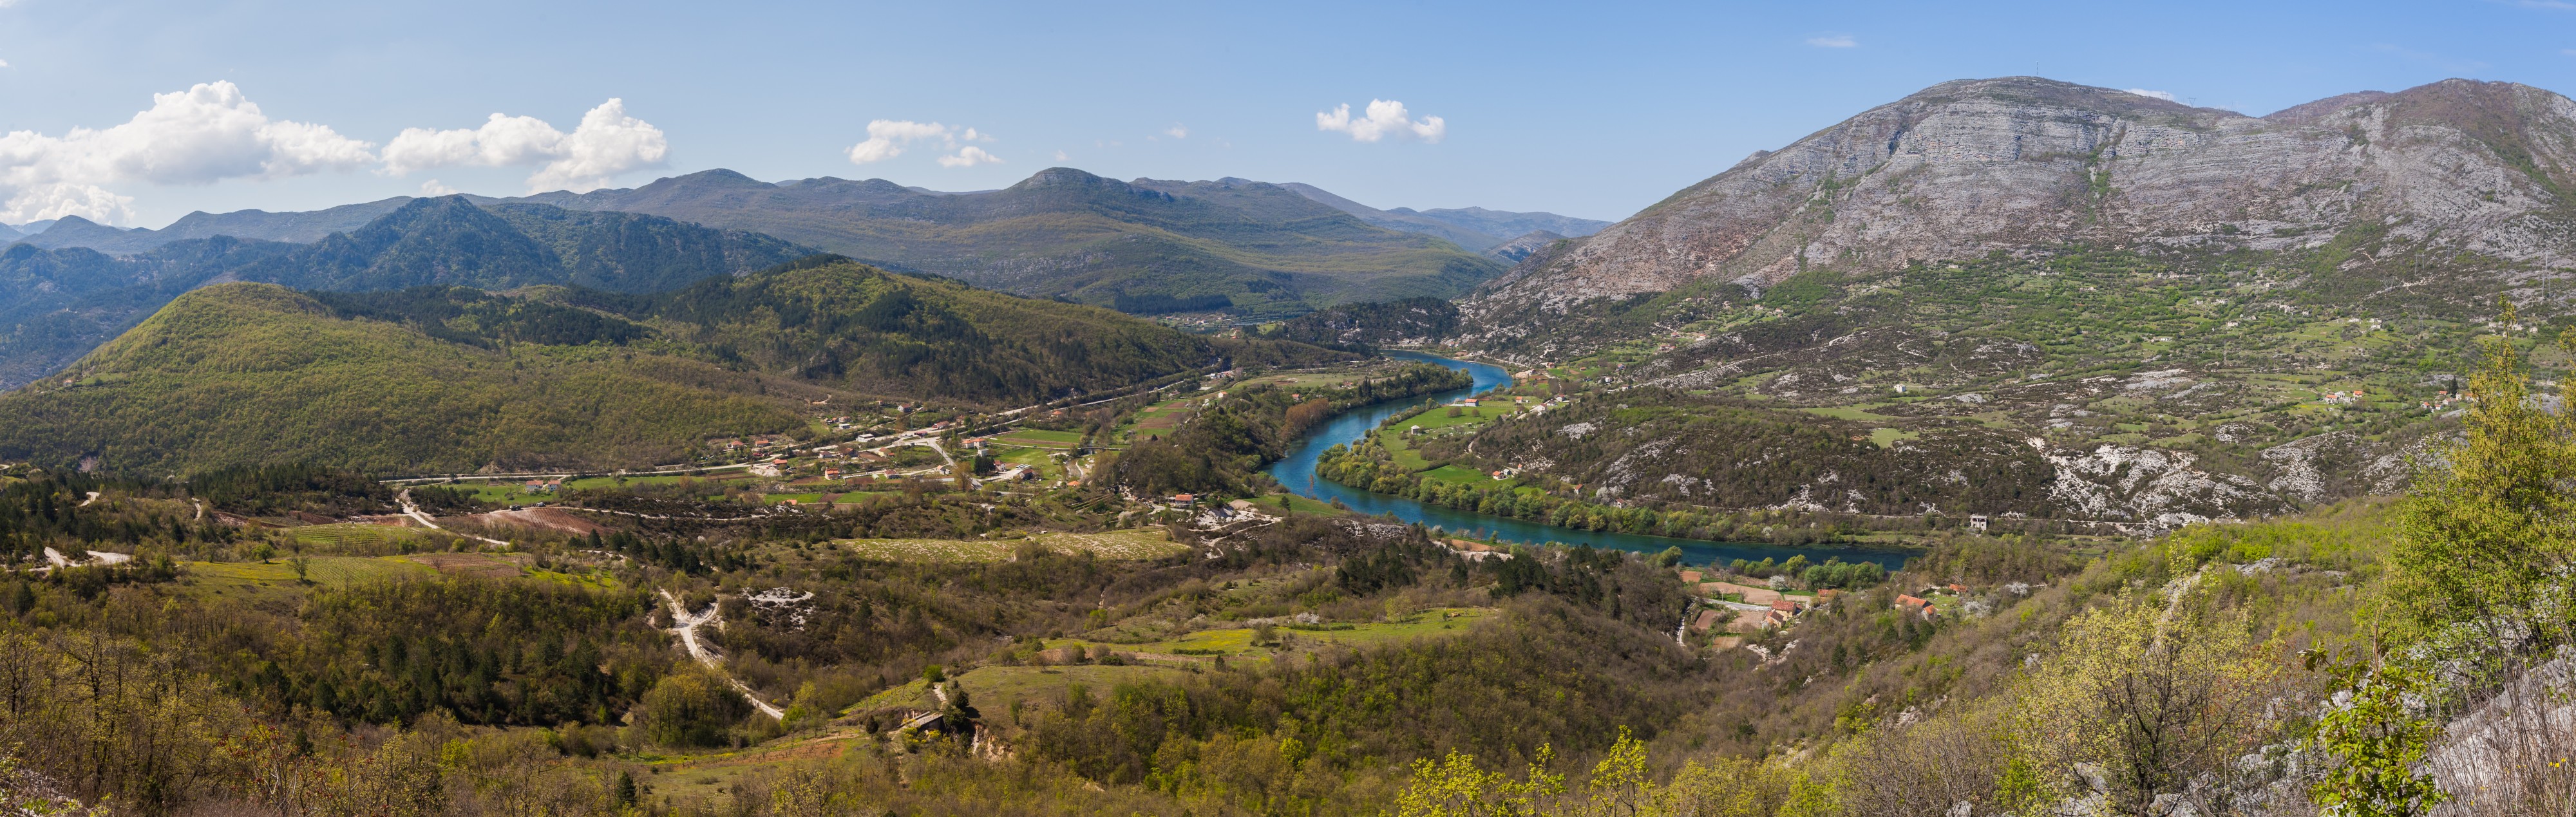 Gornji Orahovac, Bosnia y Herzegovina, 2014-04-14, DD 10-13 PAN